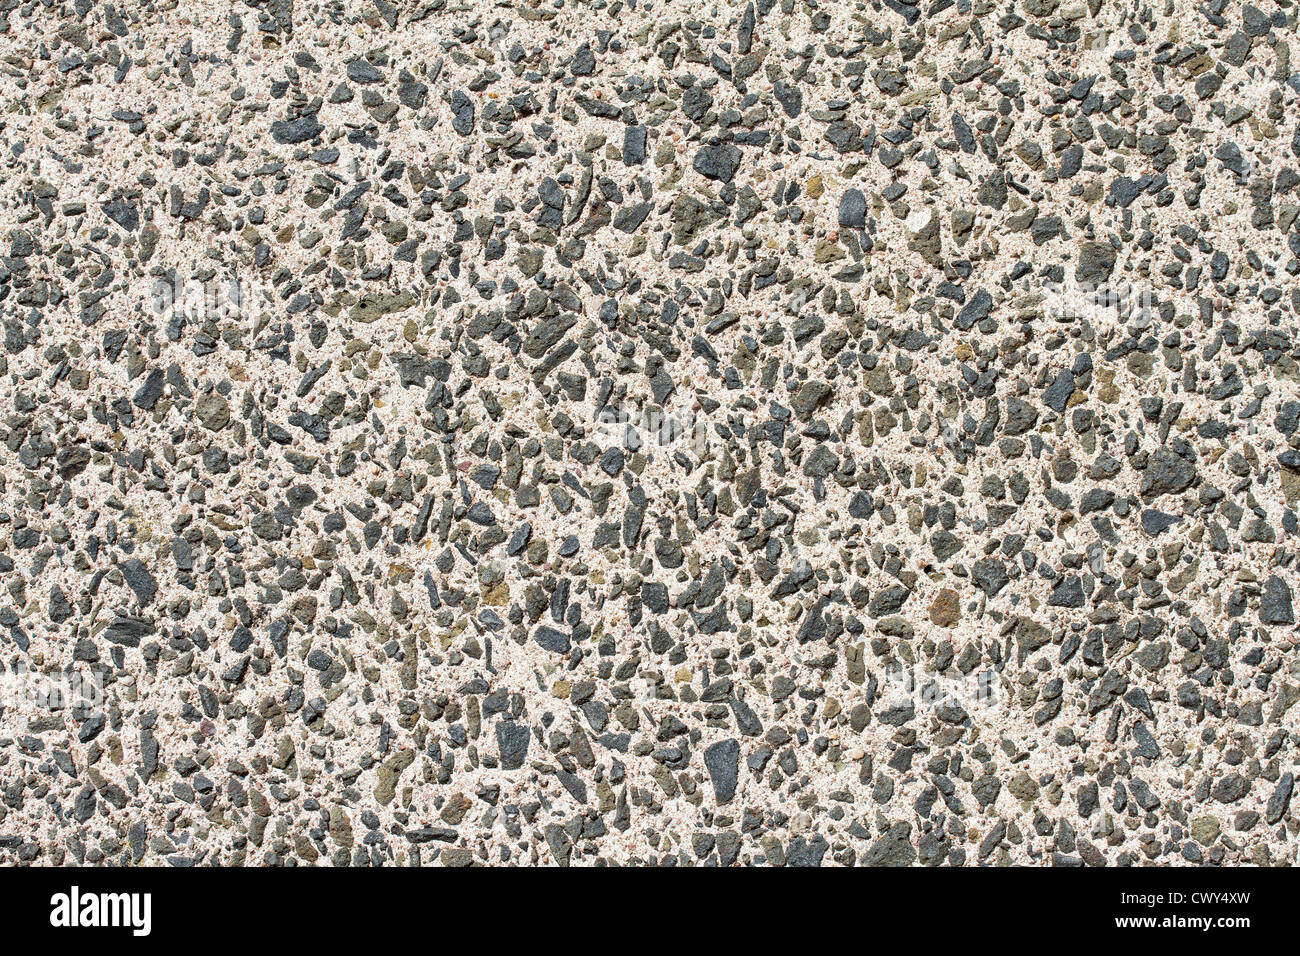 Close up image of old concrete paving slab Stock Photo